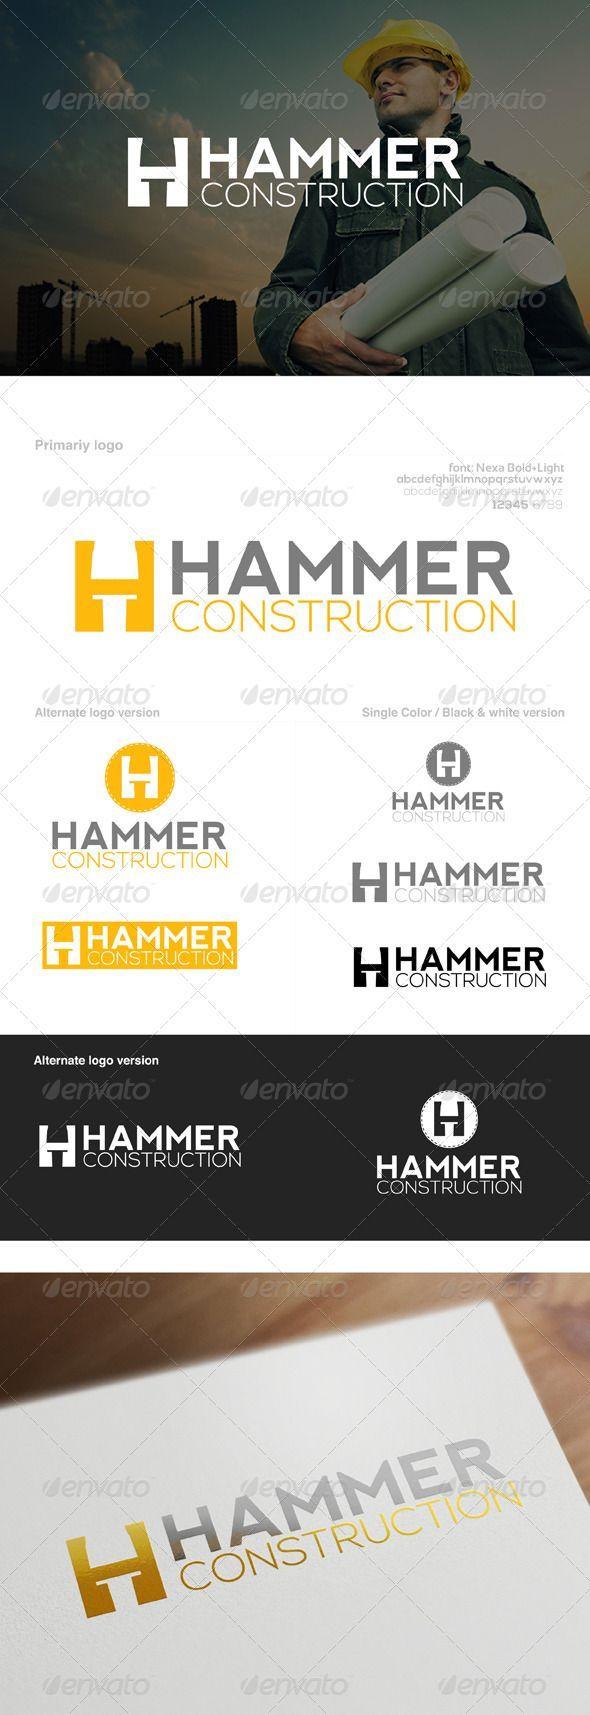 Hammer Construction Logo - Nail & Hammer Construction Company Logo | My Graphic Design ...